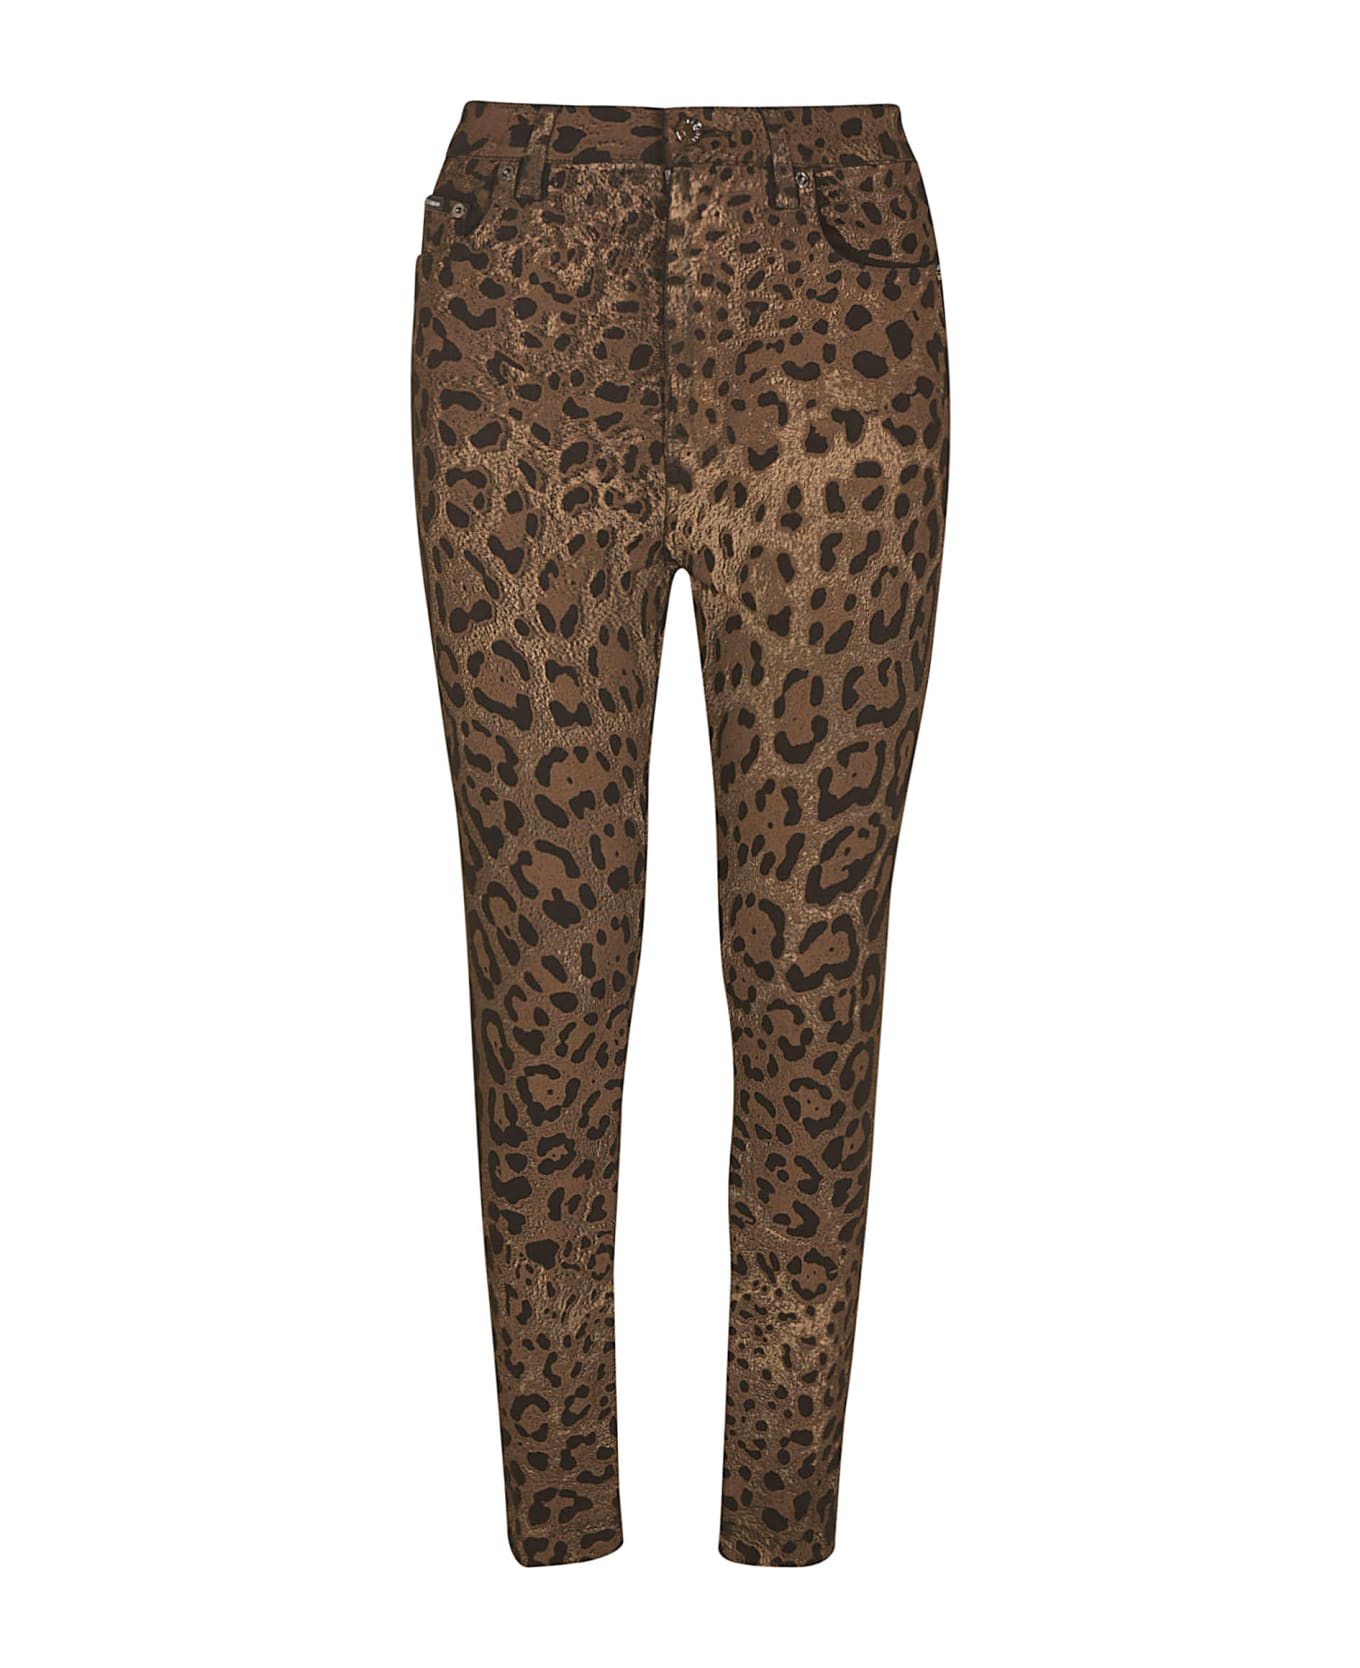 Dolce & Gabbana Animal Print Jeans - Brown/Black